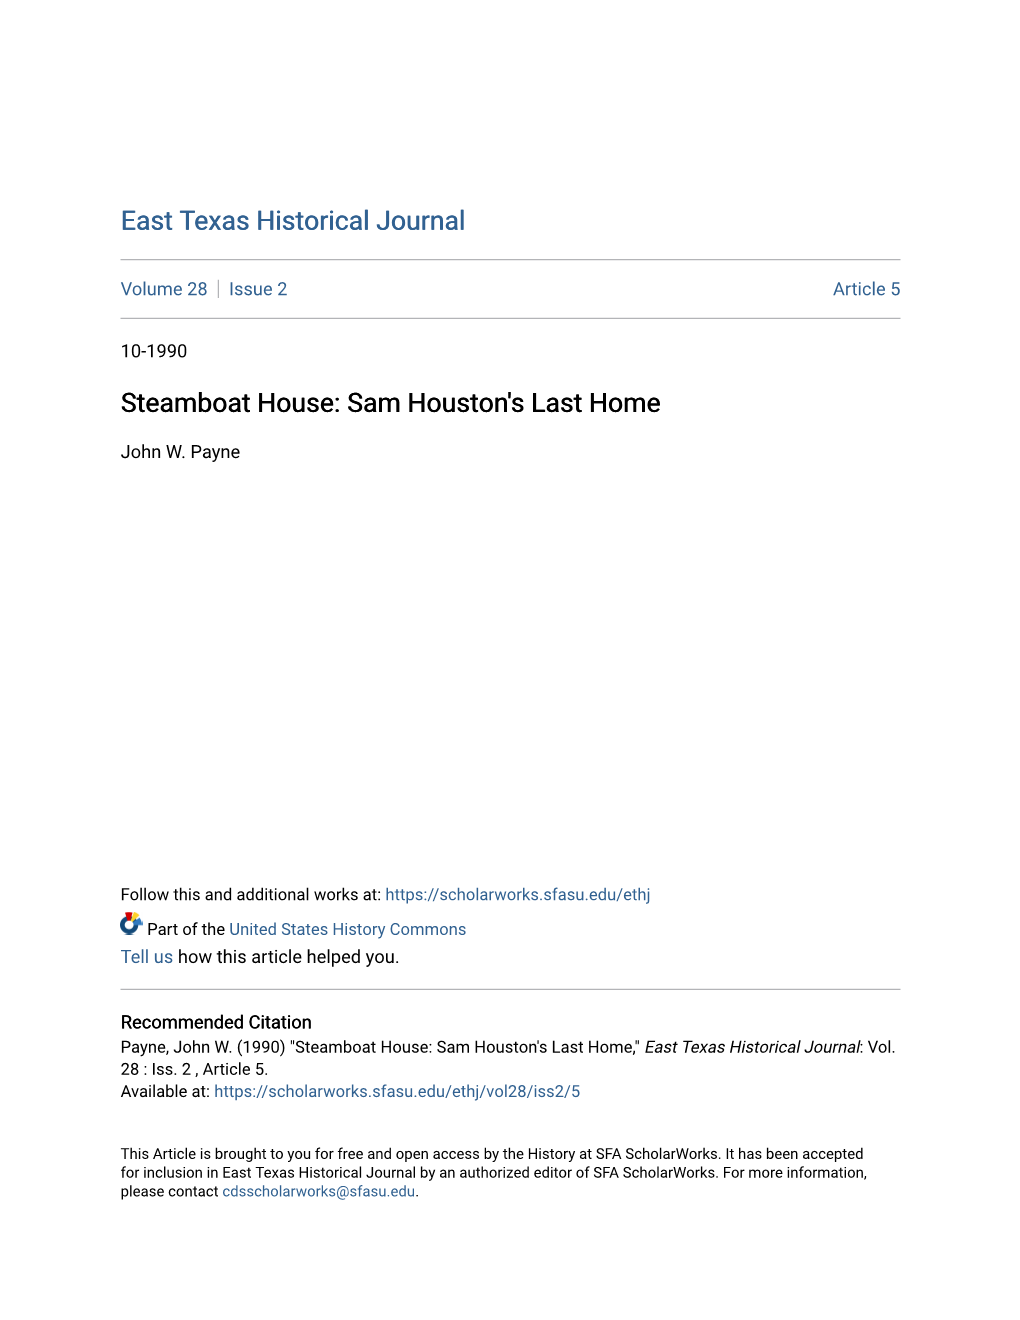 Steamboat House: Sam Houston's Last Home